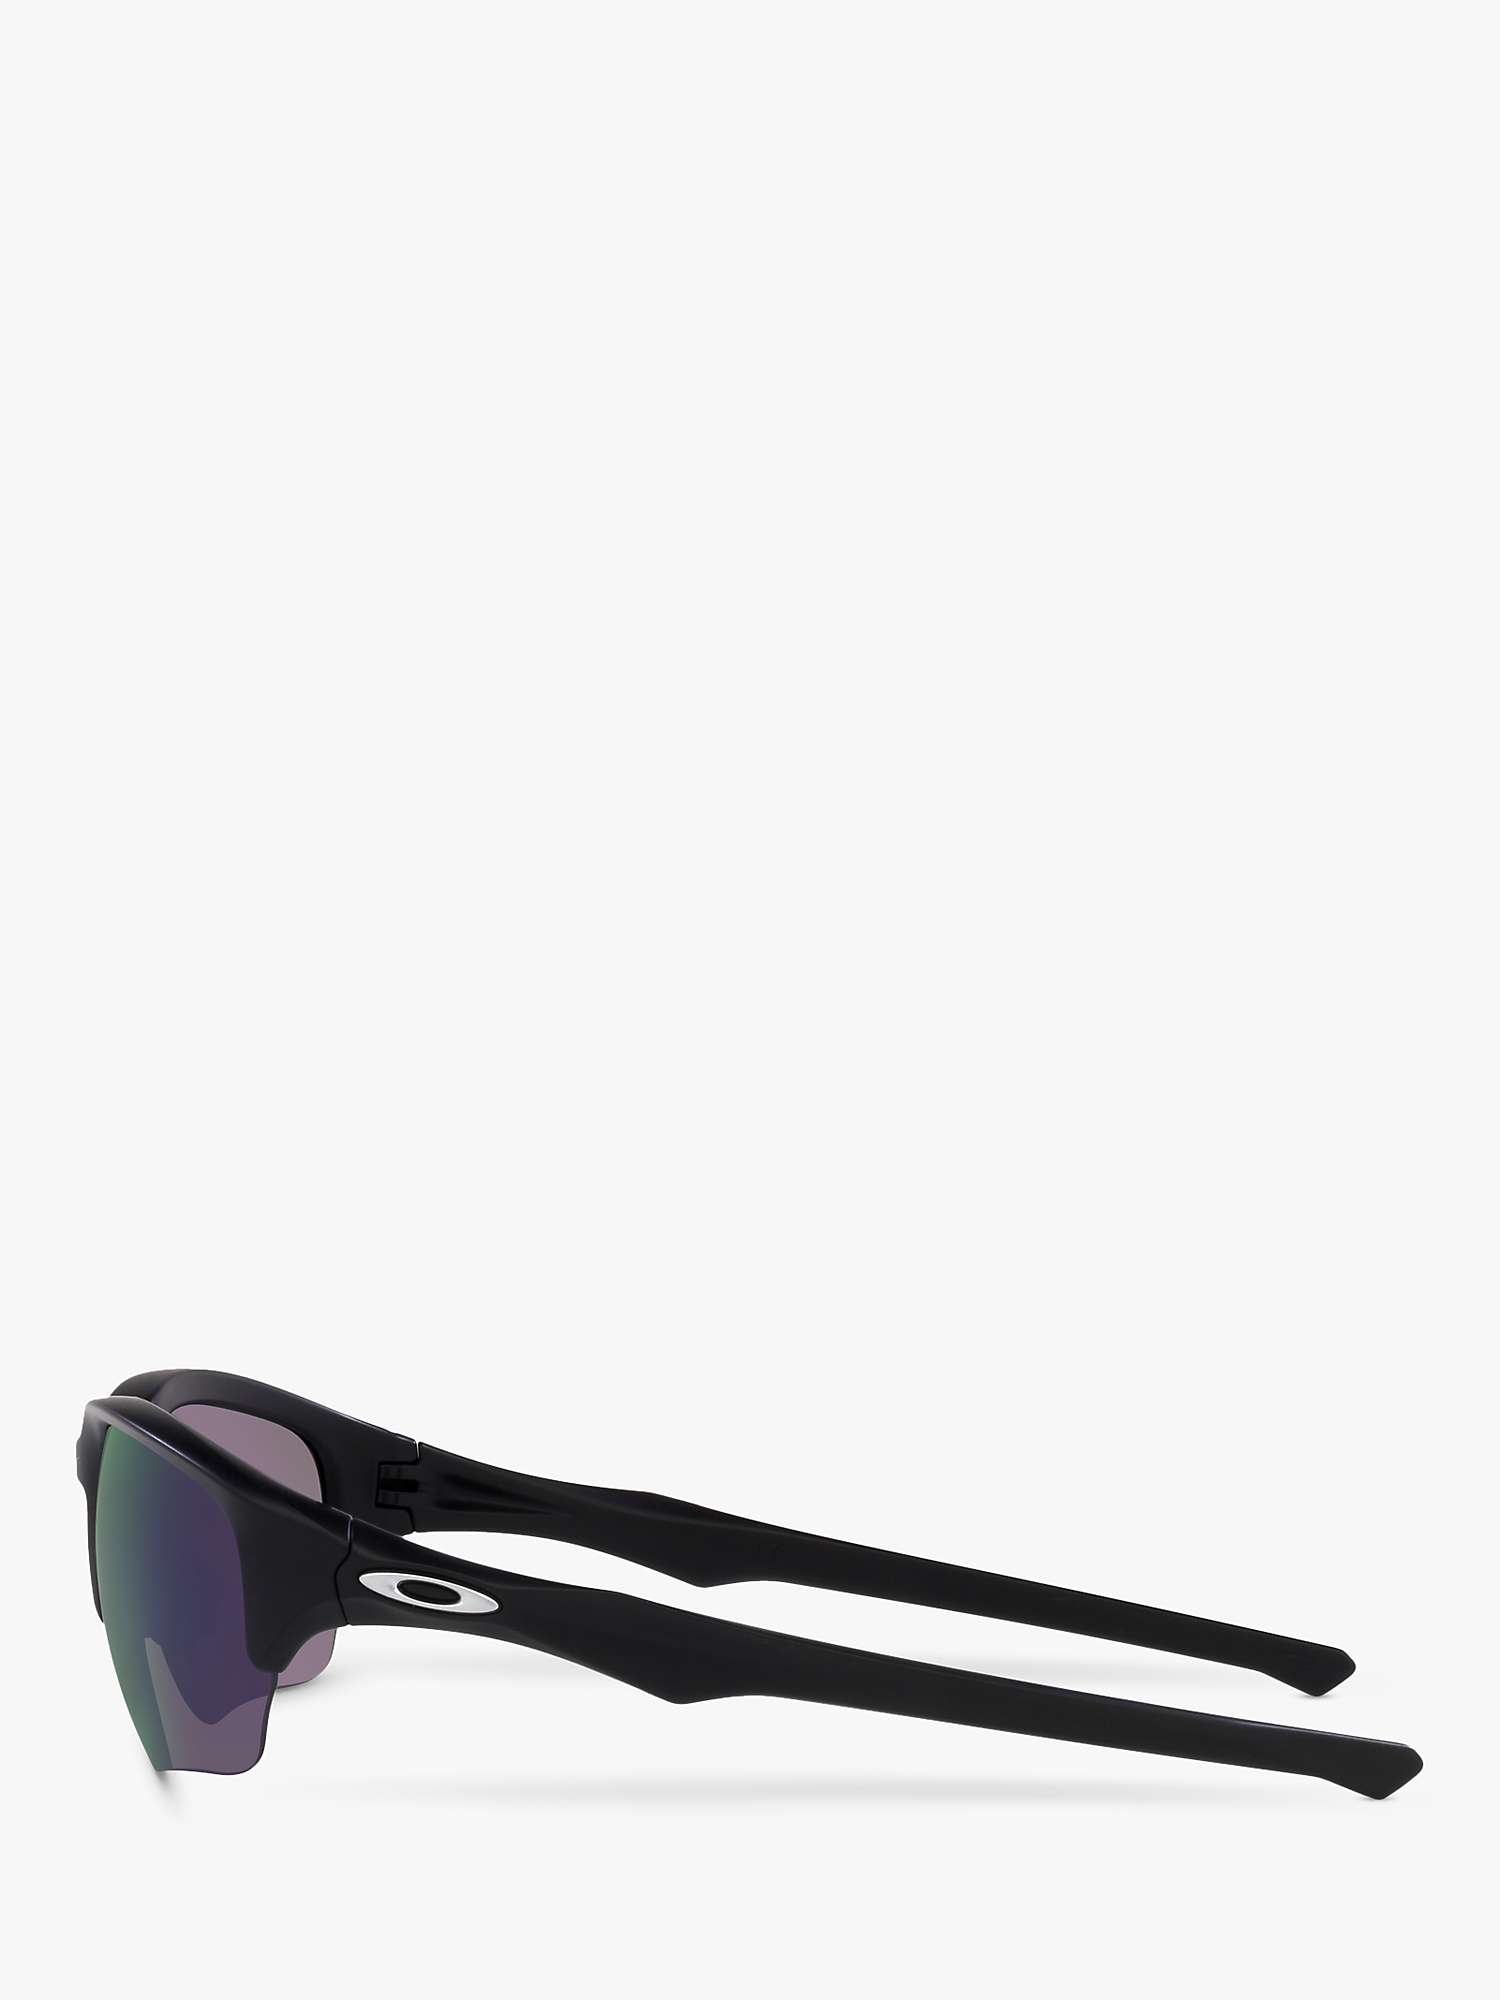 Buy Oakley OO9363 Men's Flak Beta Prizm Rectangular Sunglasses Online at johnlewis.com